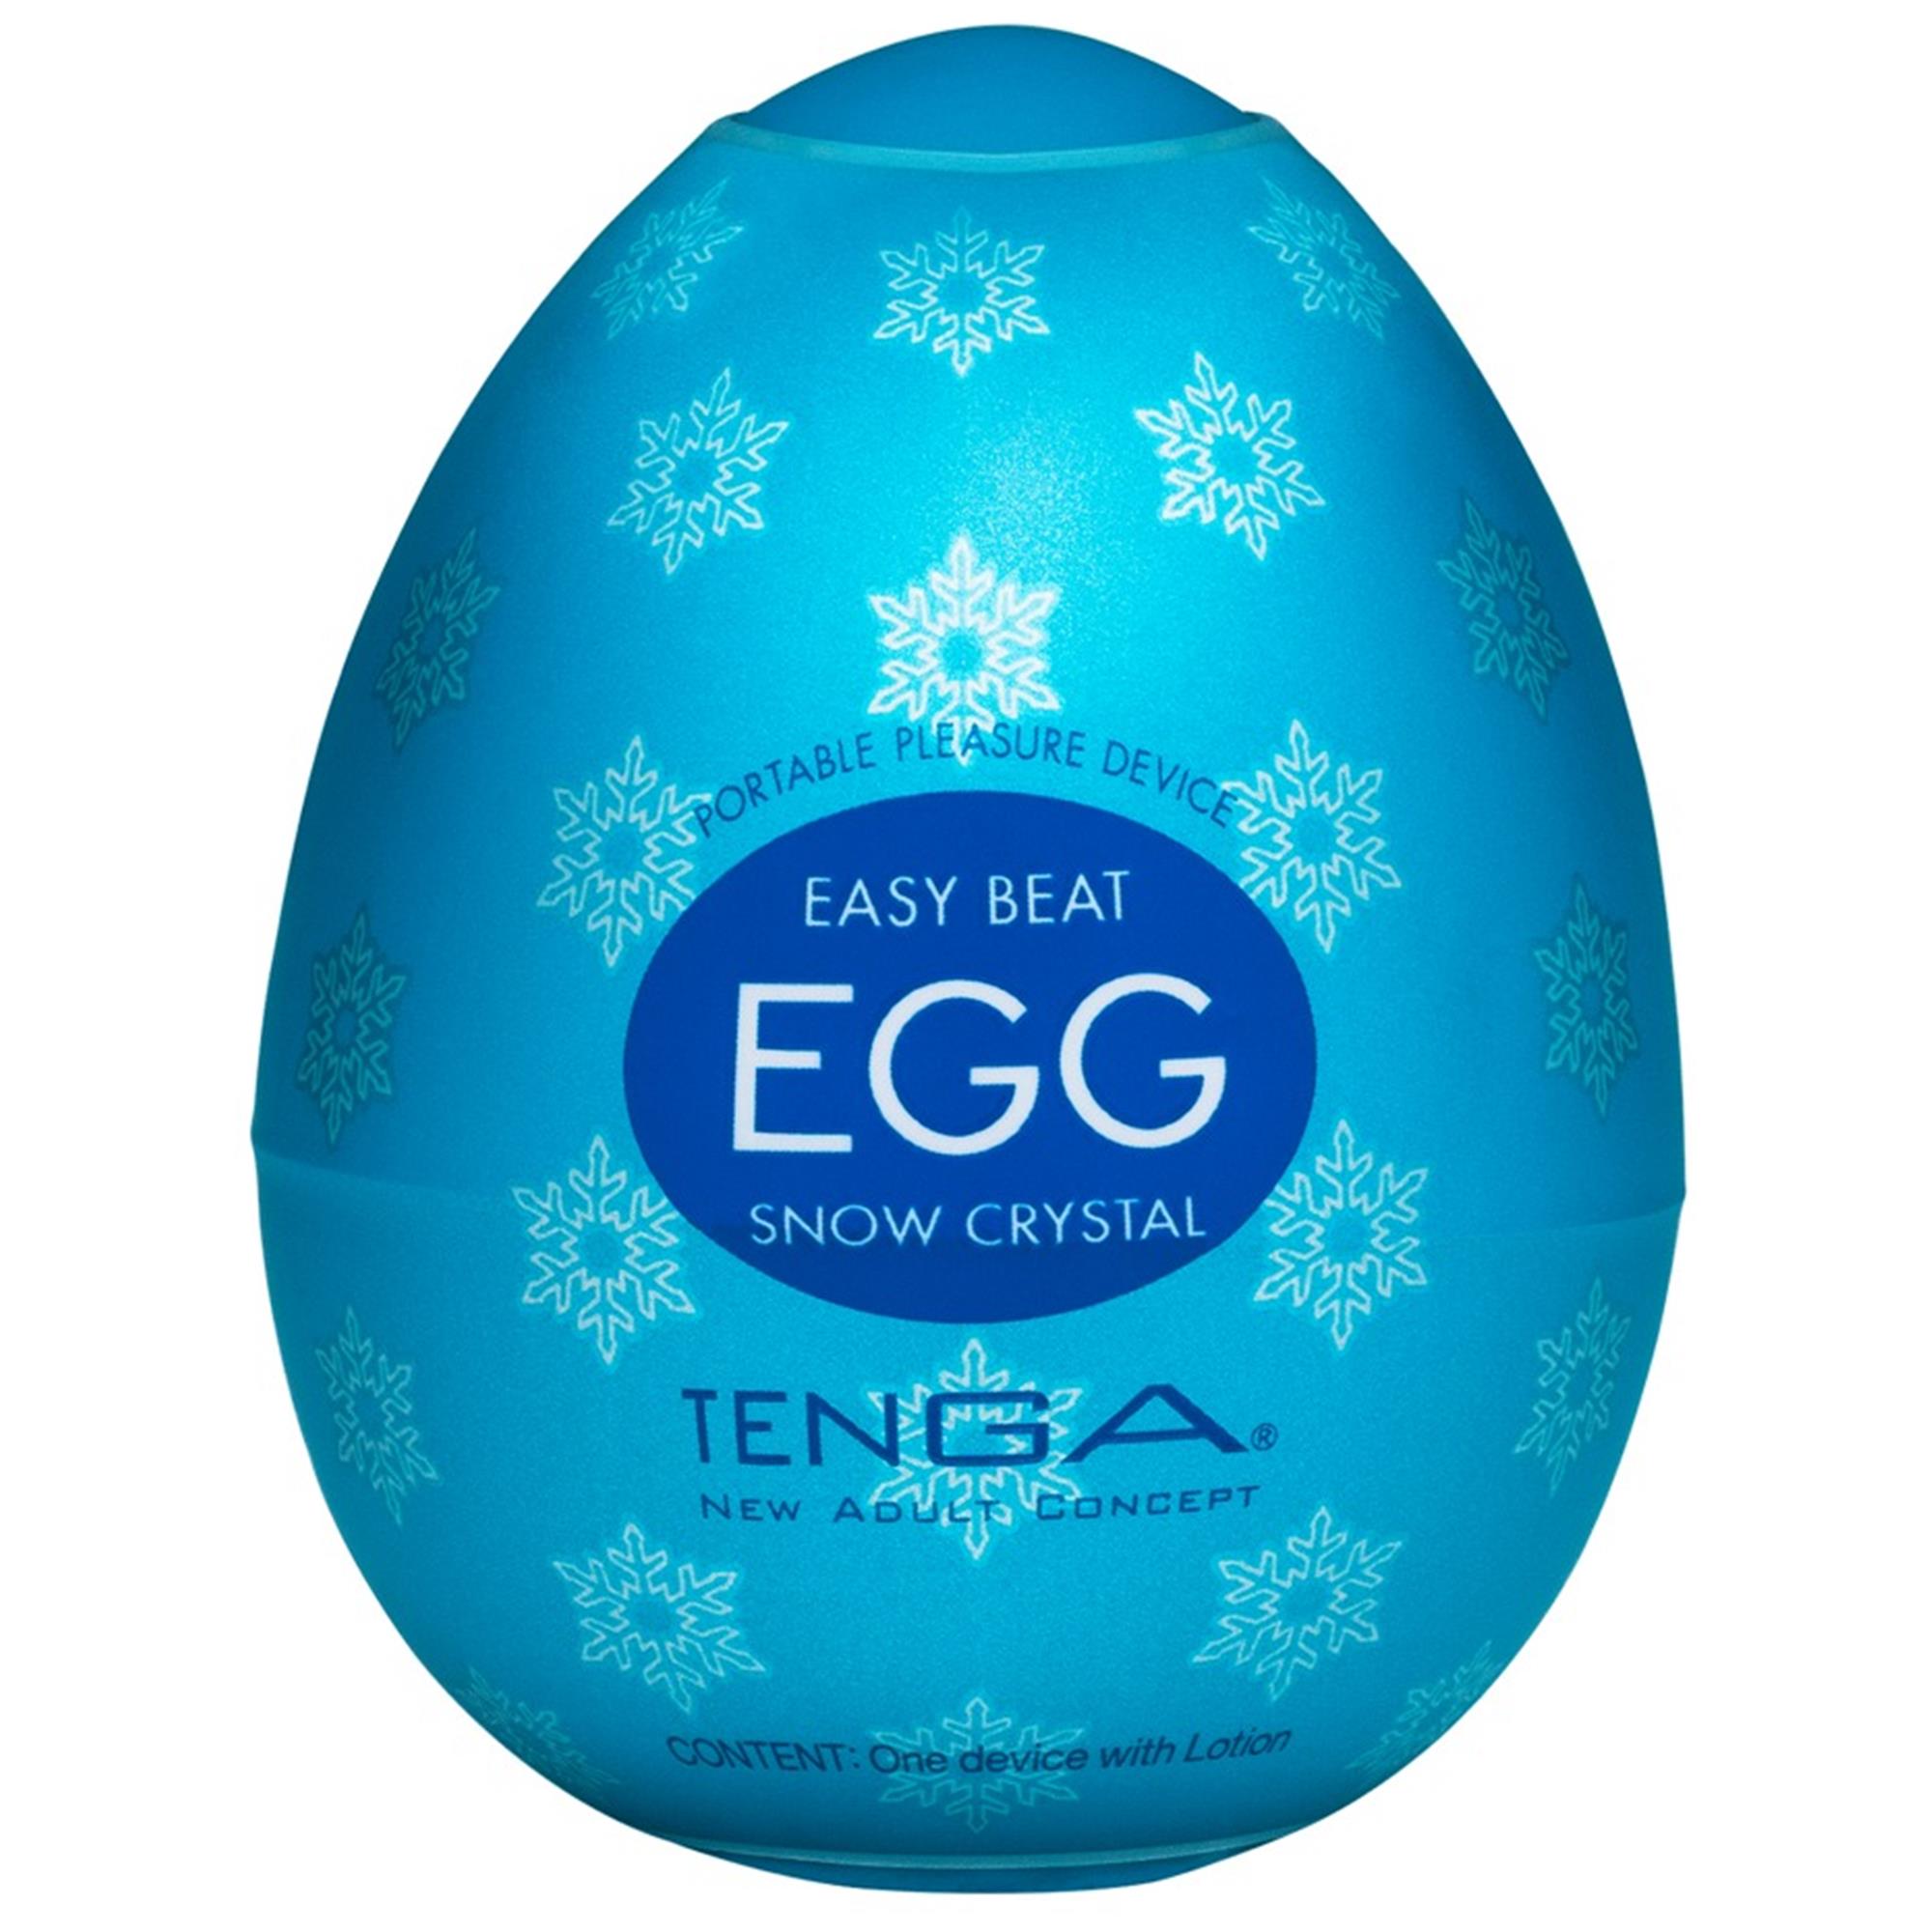 Tenga Egg Snow Crystal | Runkägg | Intimast